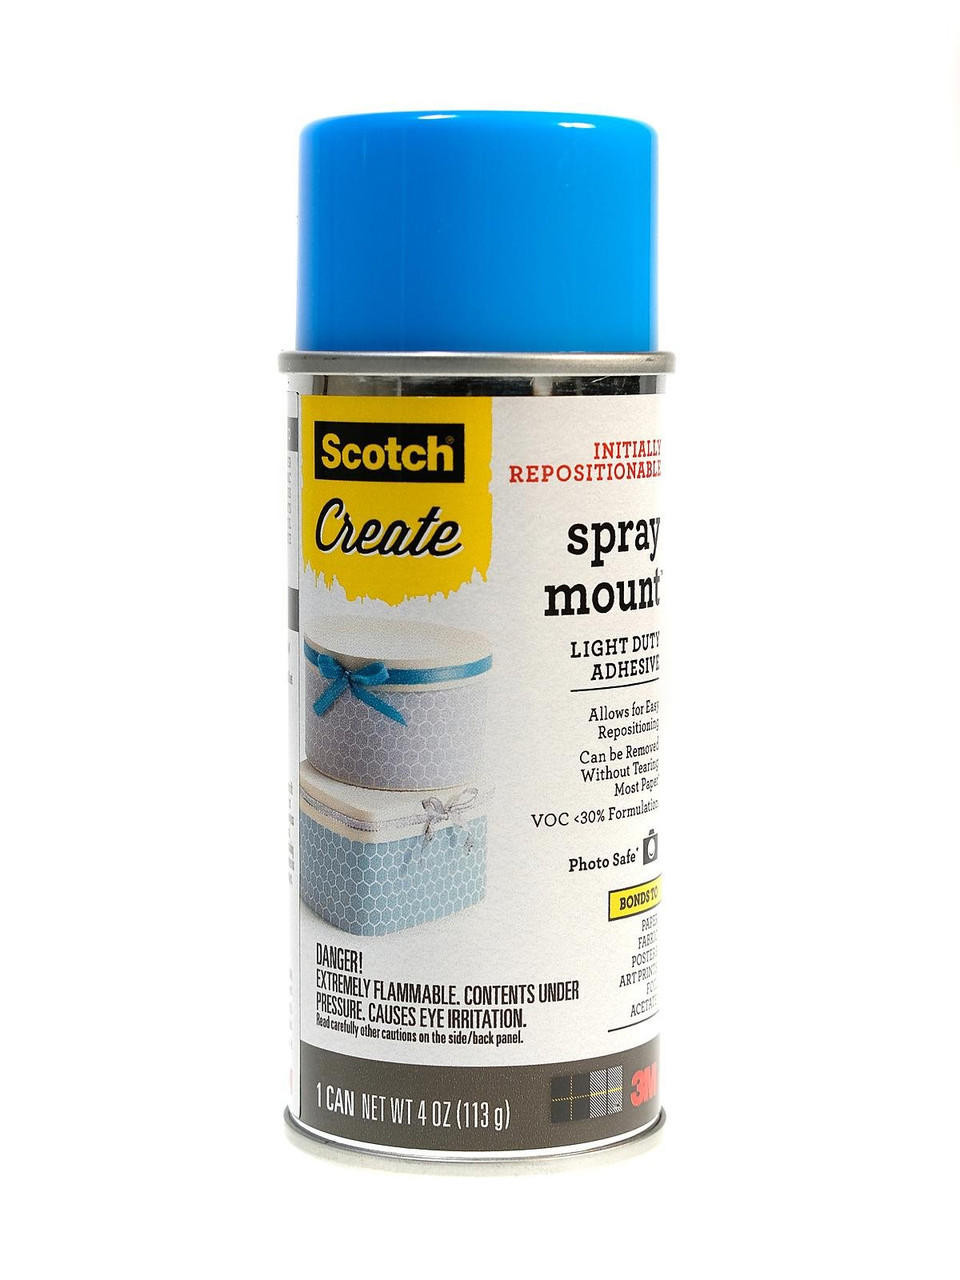 Scotch Create Spray Mount, Repositionable, Light-Duty Adhesive